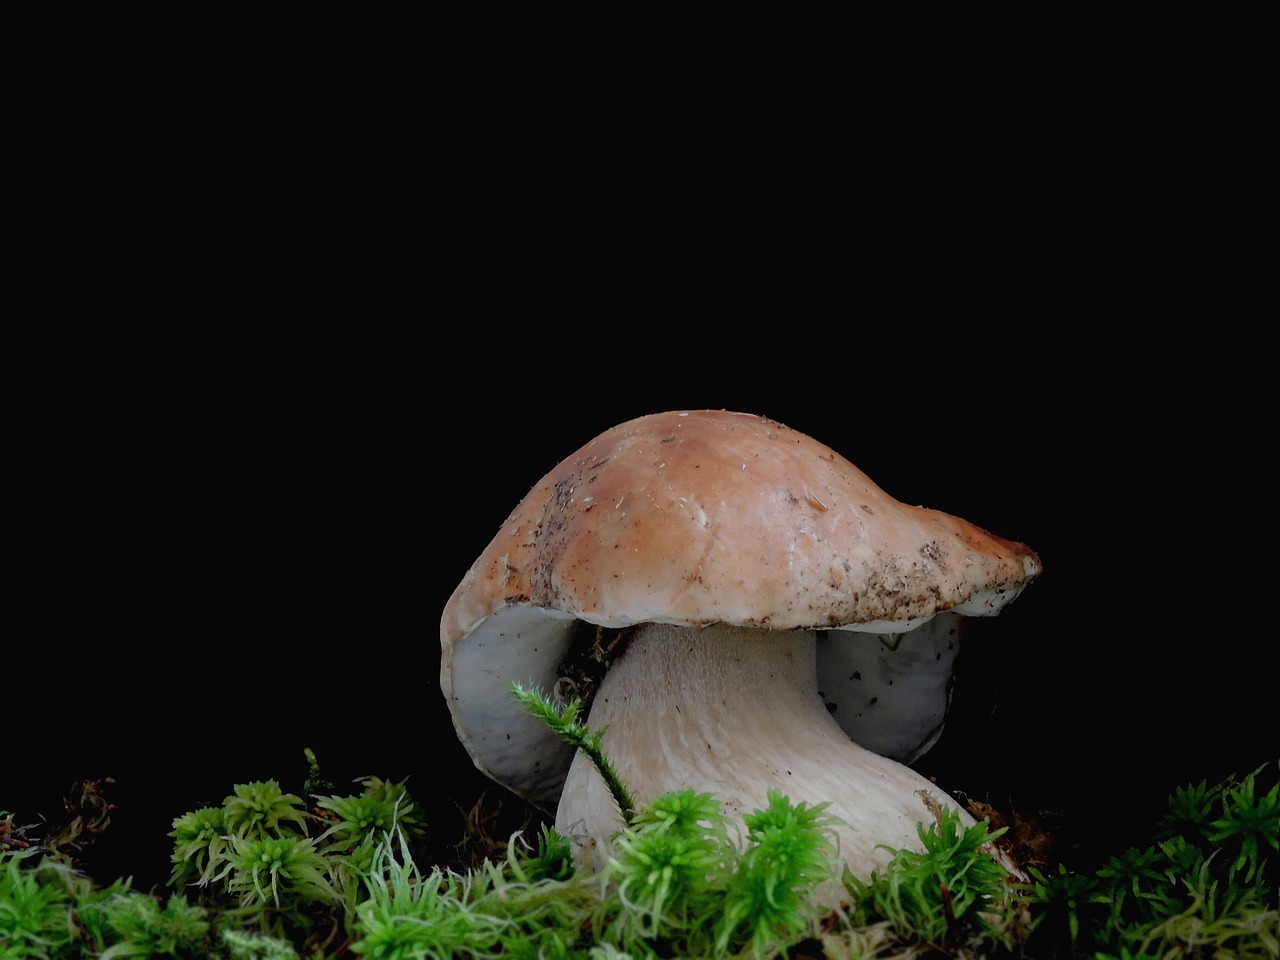 cep mushroom dickröhrling free photo